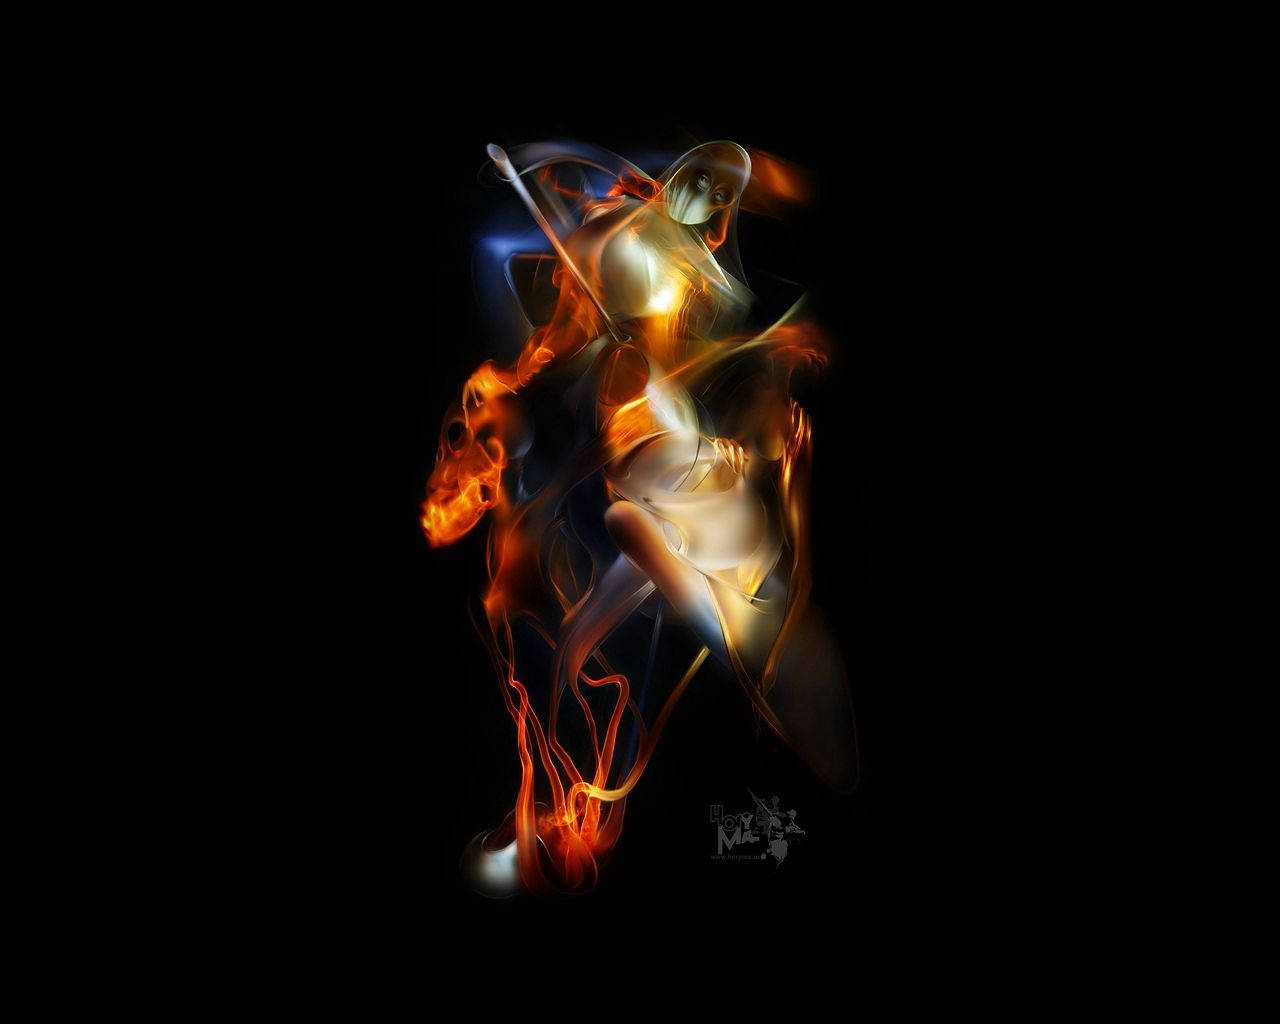 Woman Flames Abstract Image Wallpaper